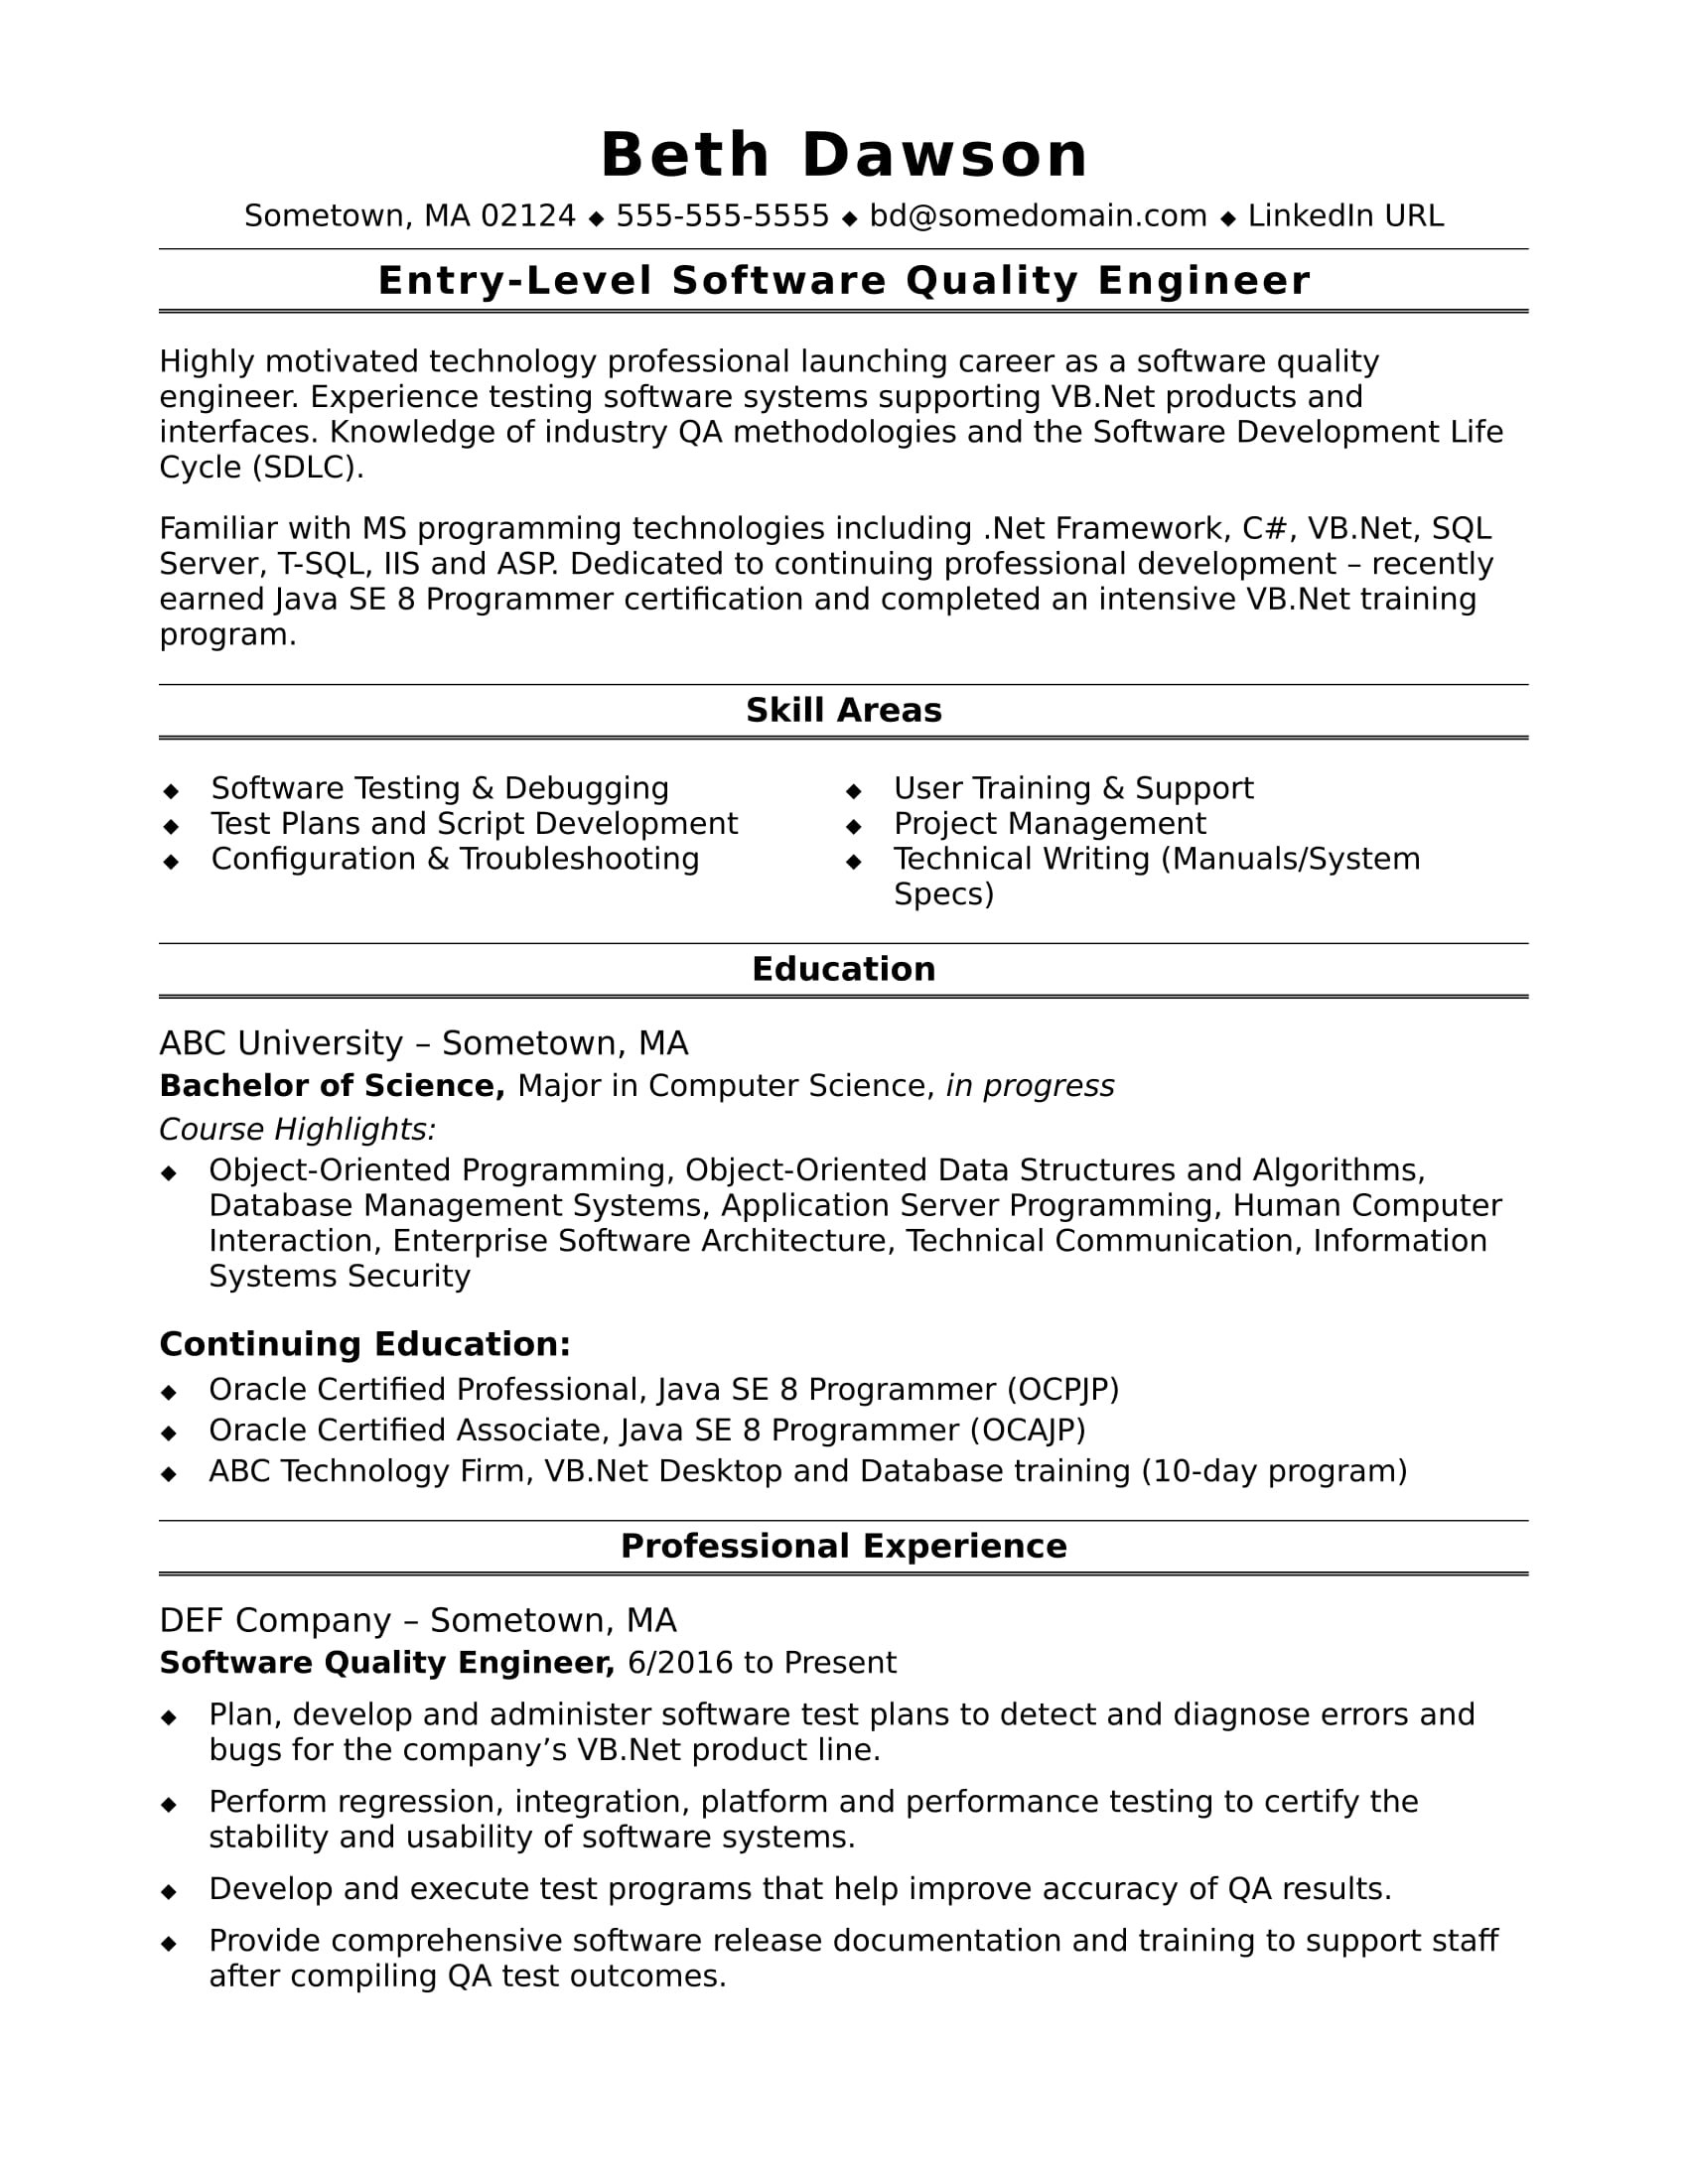 New Grad software Engineer Resume Sample Entry-level Qa Engineer Resume Monster.com